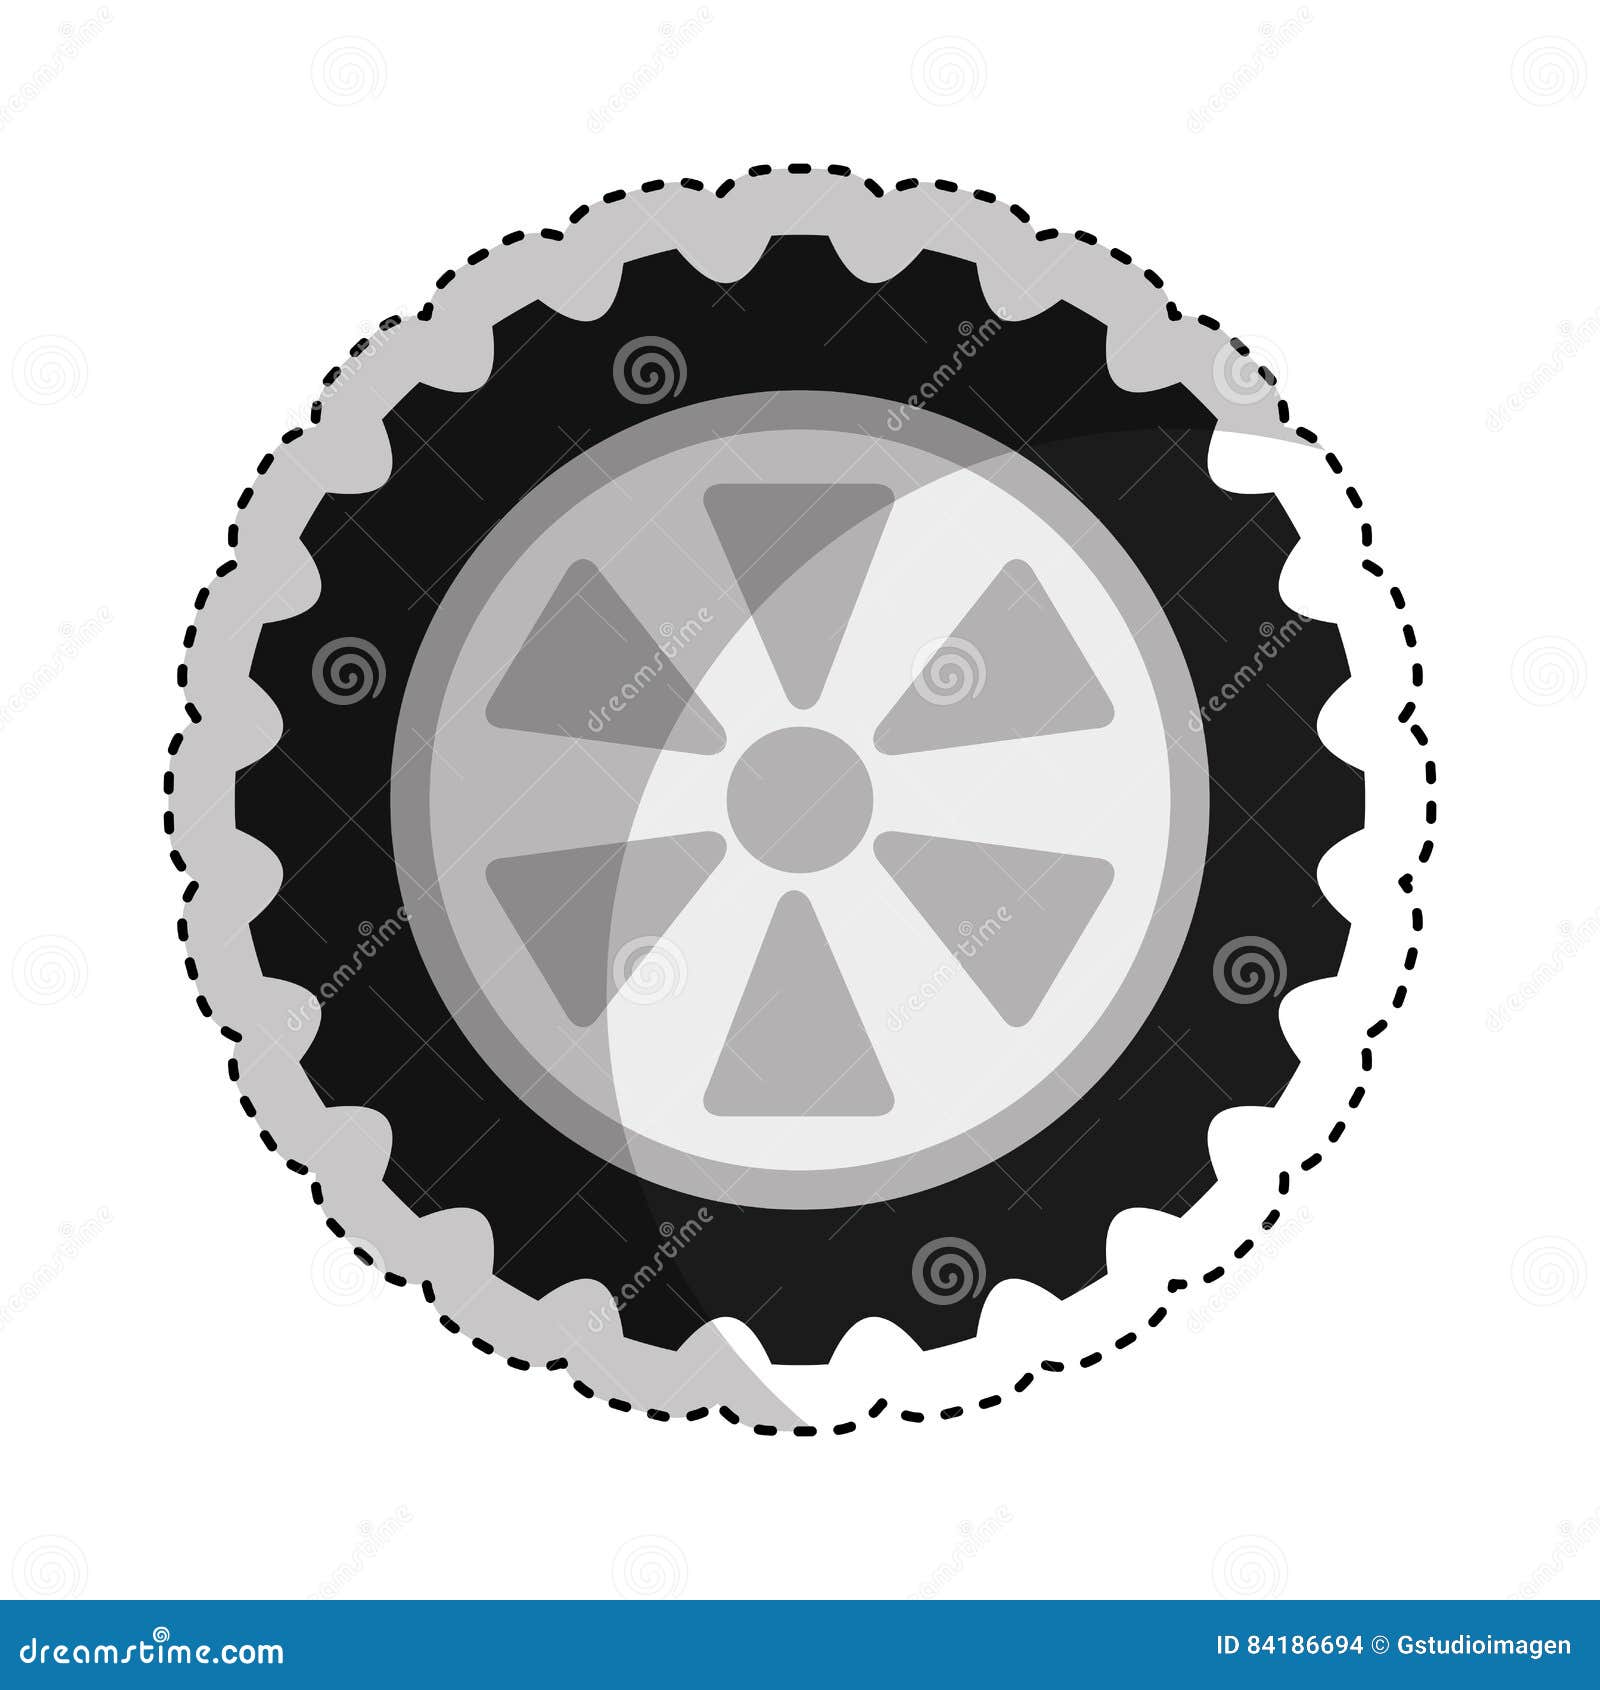 Car tire isolated icon stock illustration. Illustration of wheel - 84186694